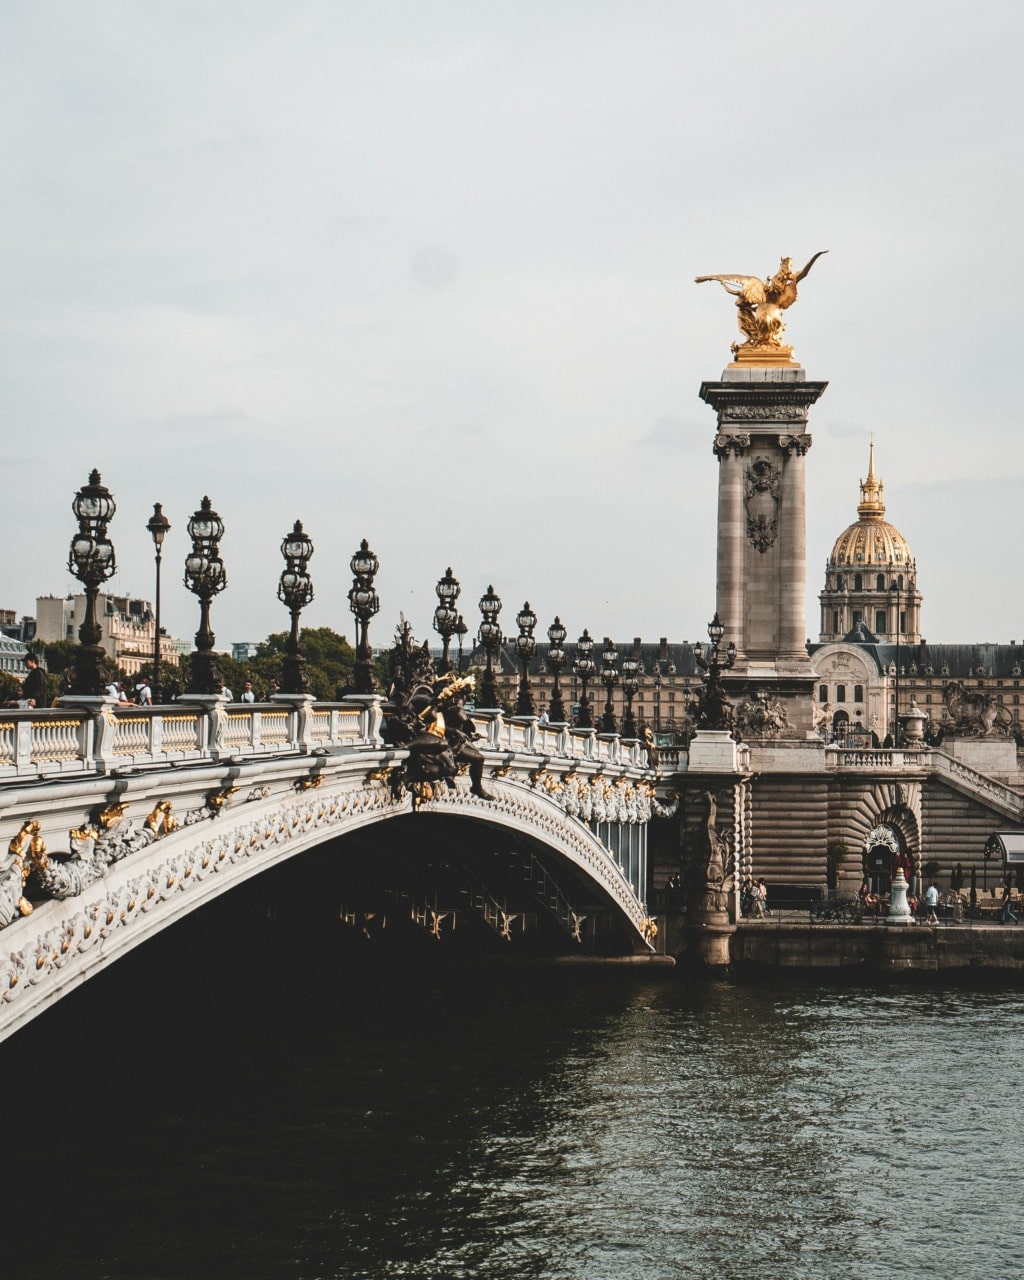 Pont Alexandre III bridge is the most beautiful bridge of Paris in my opinion